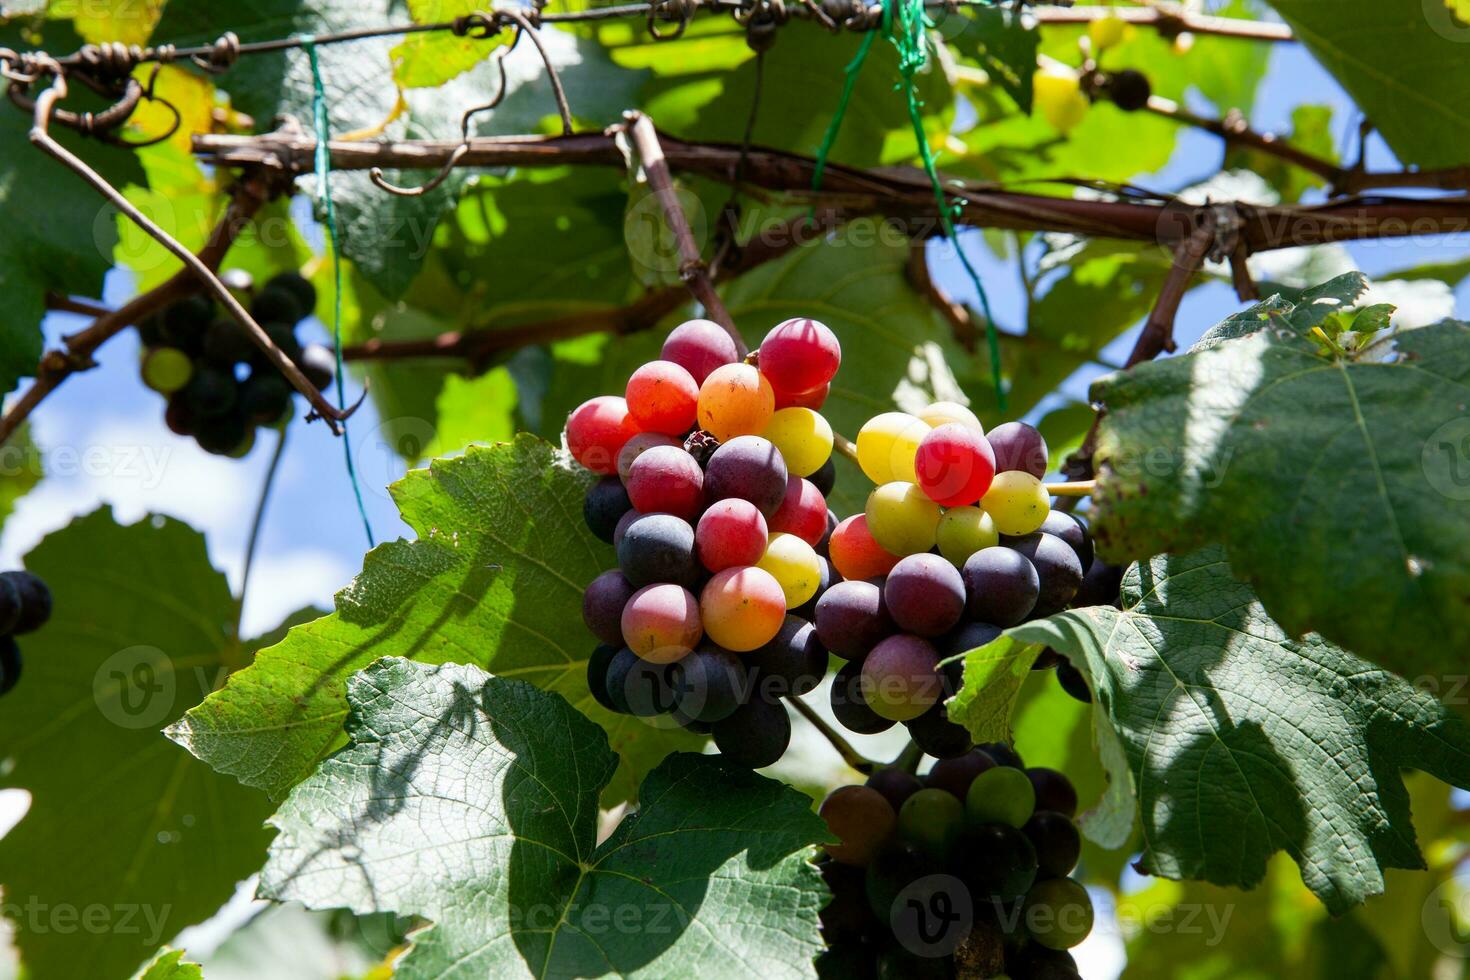 klasar av vitis labrusca vindruvor i de bearbeta av mogning i en druva odling på la union i de valle del cauca område av colombia foto